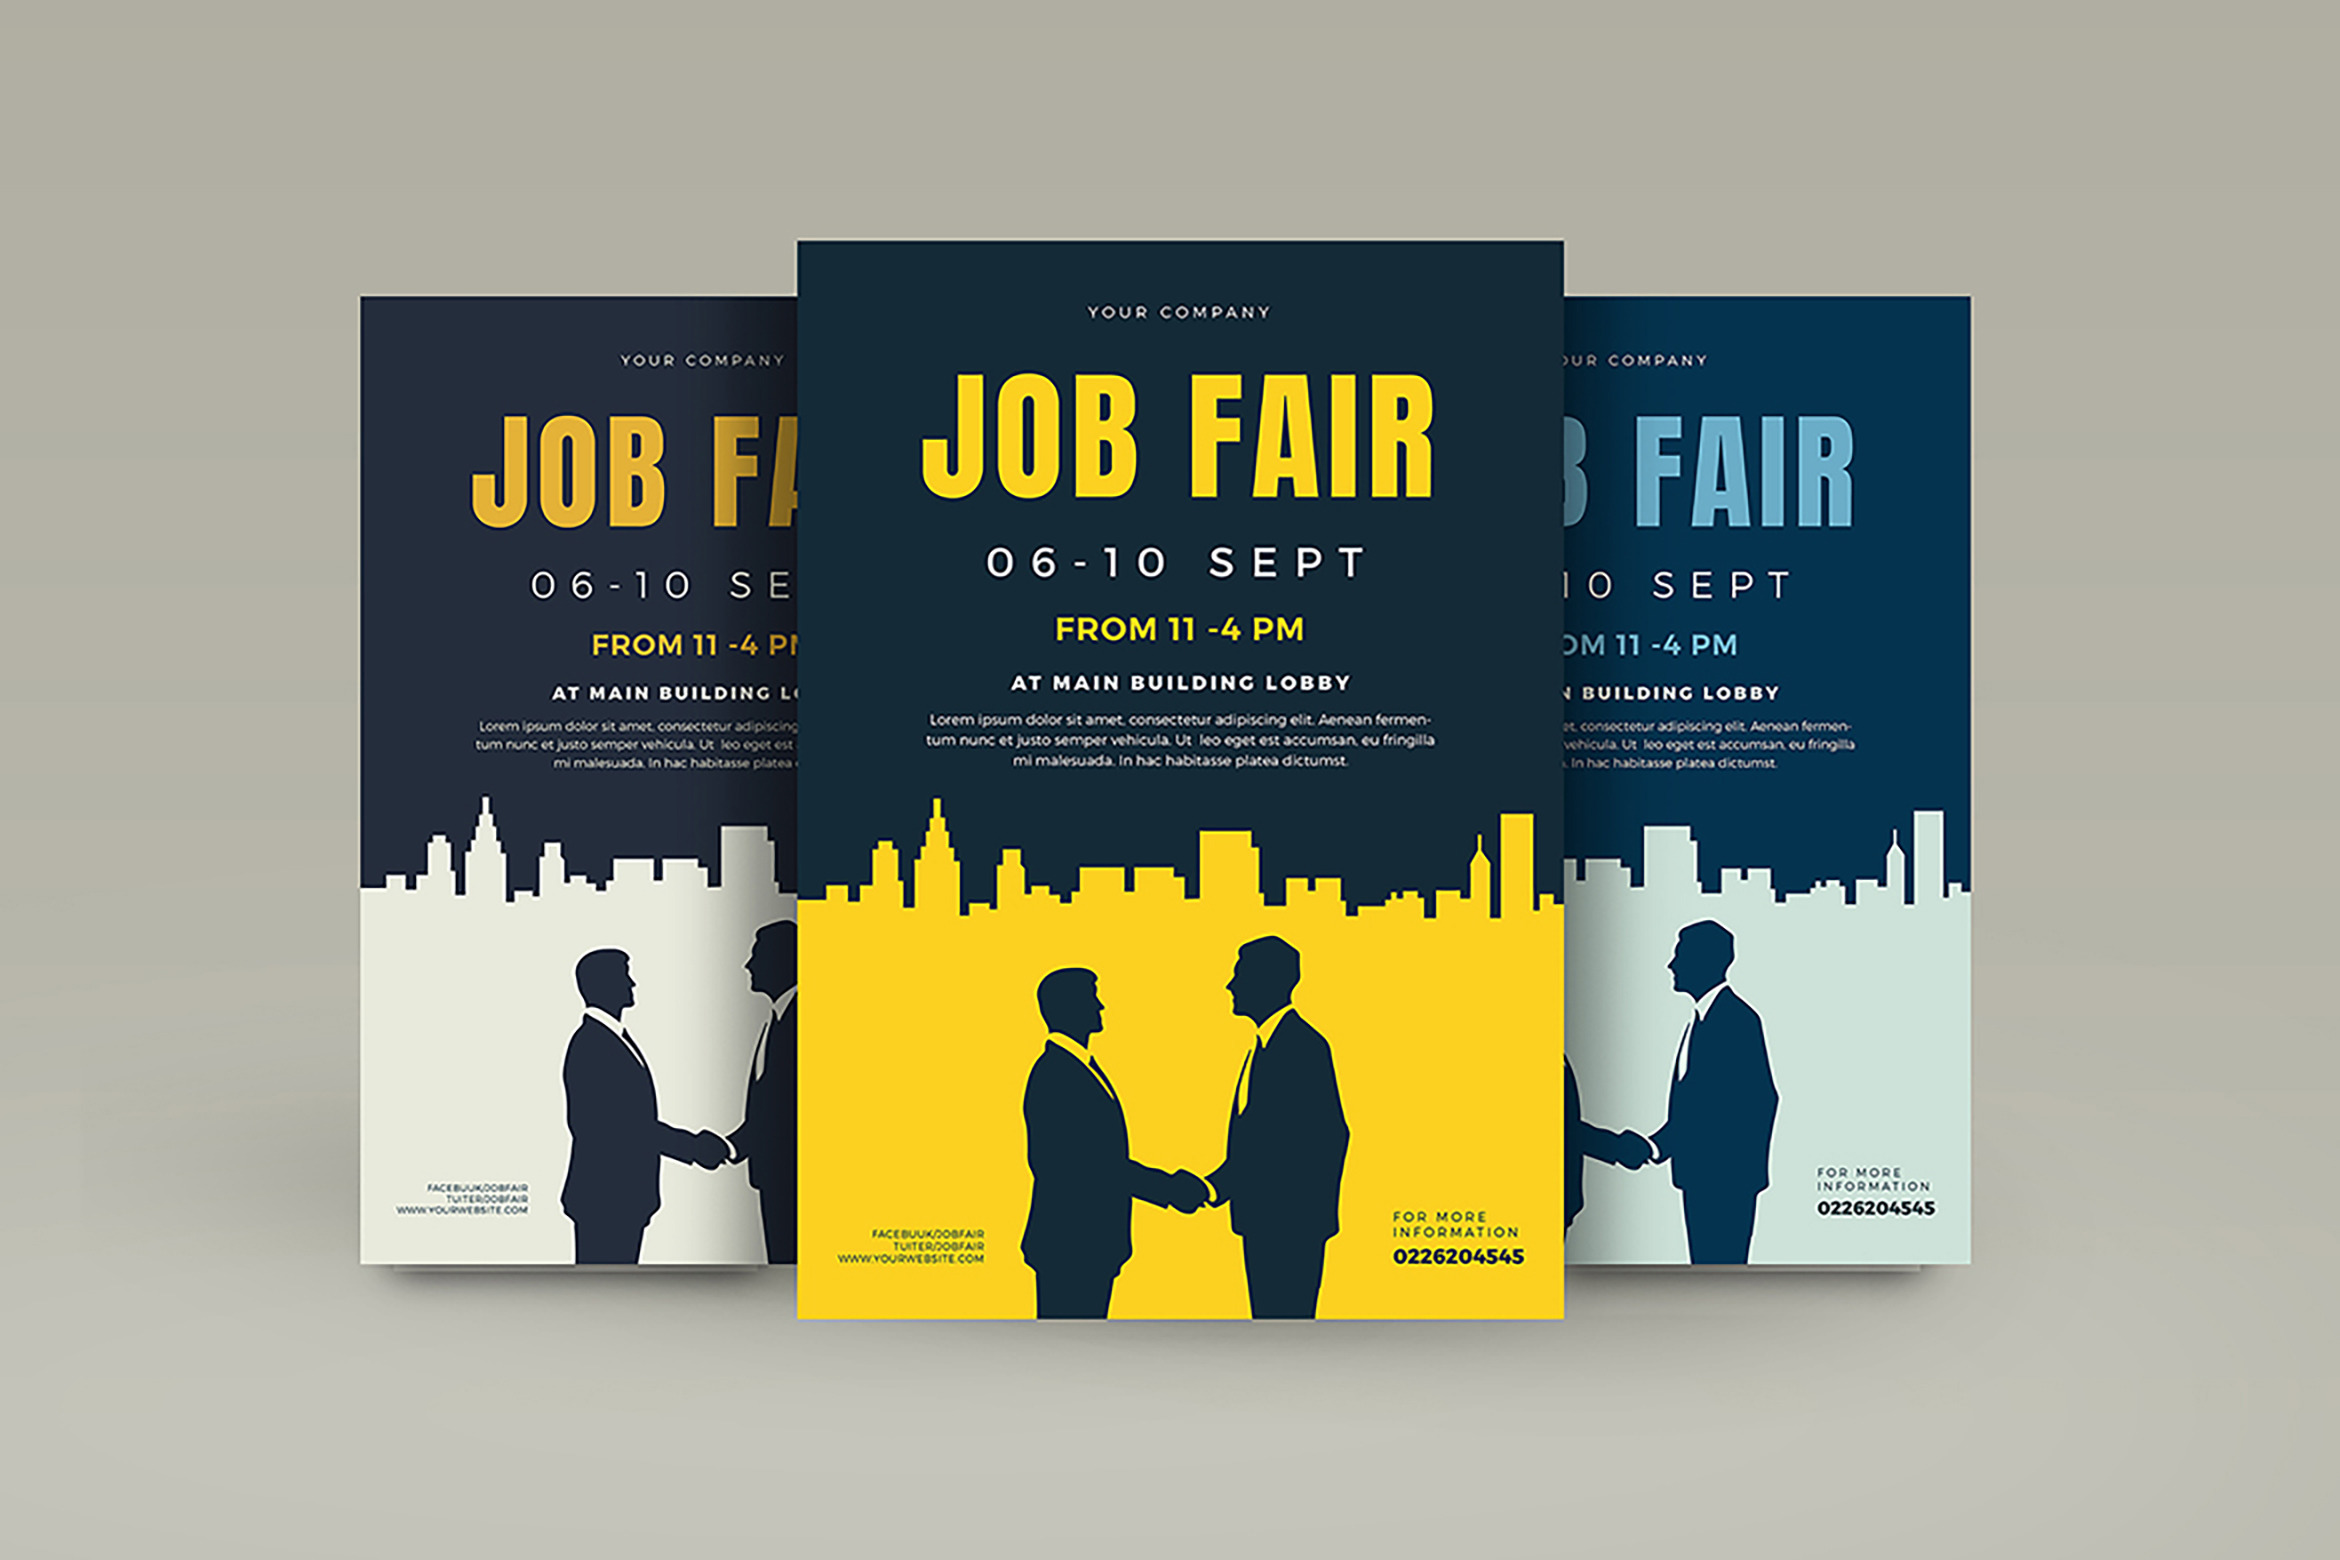 Job Fair Flyer Template from cmkt-image-prd.freetls.fastly.net